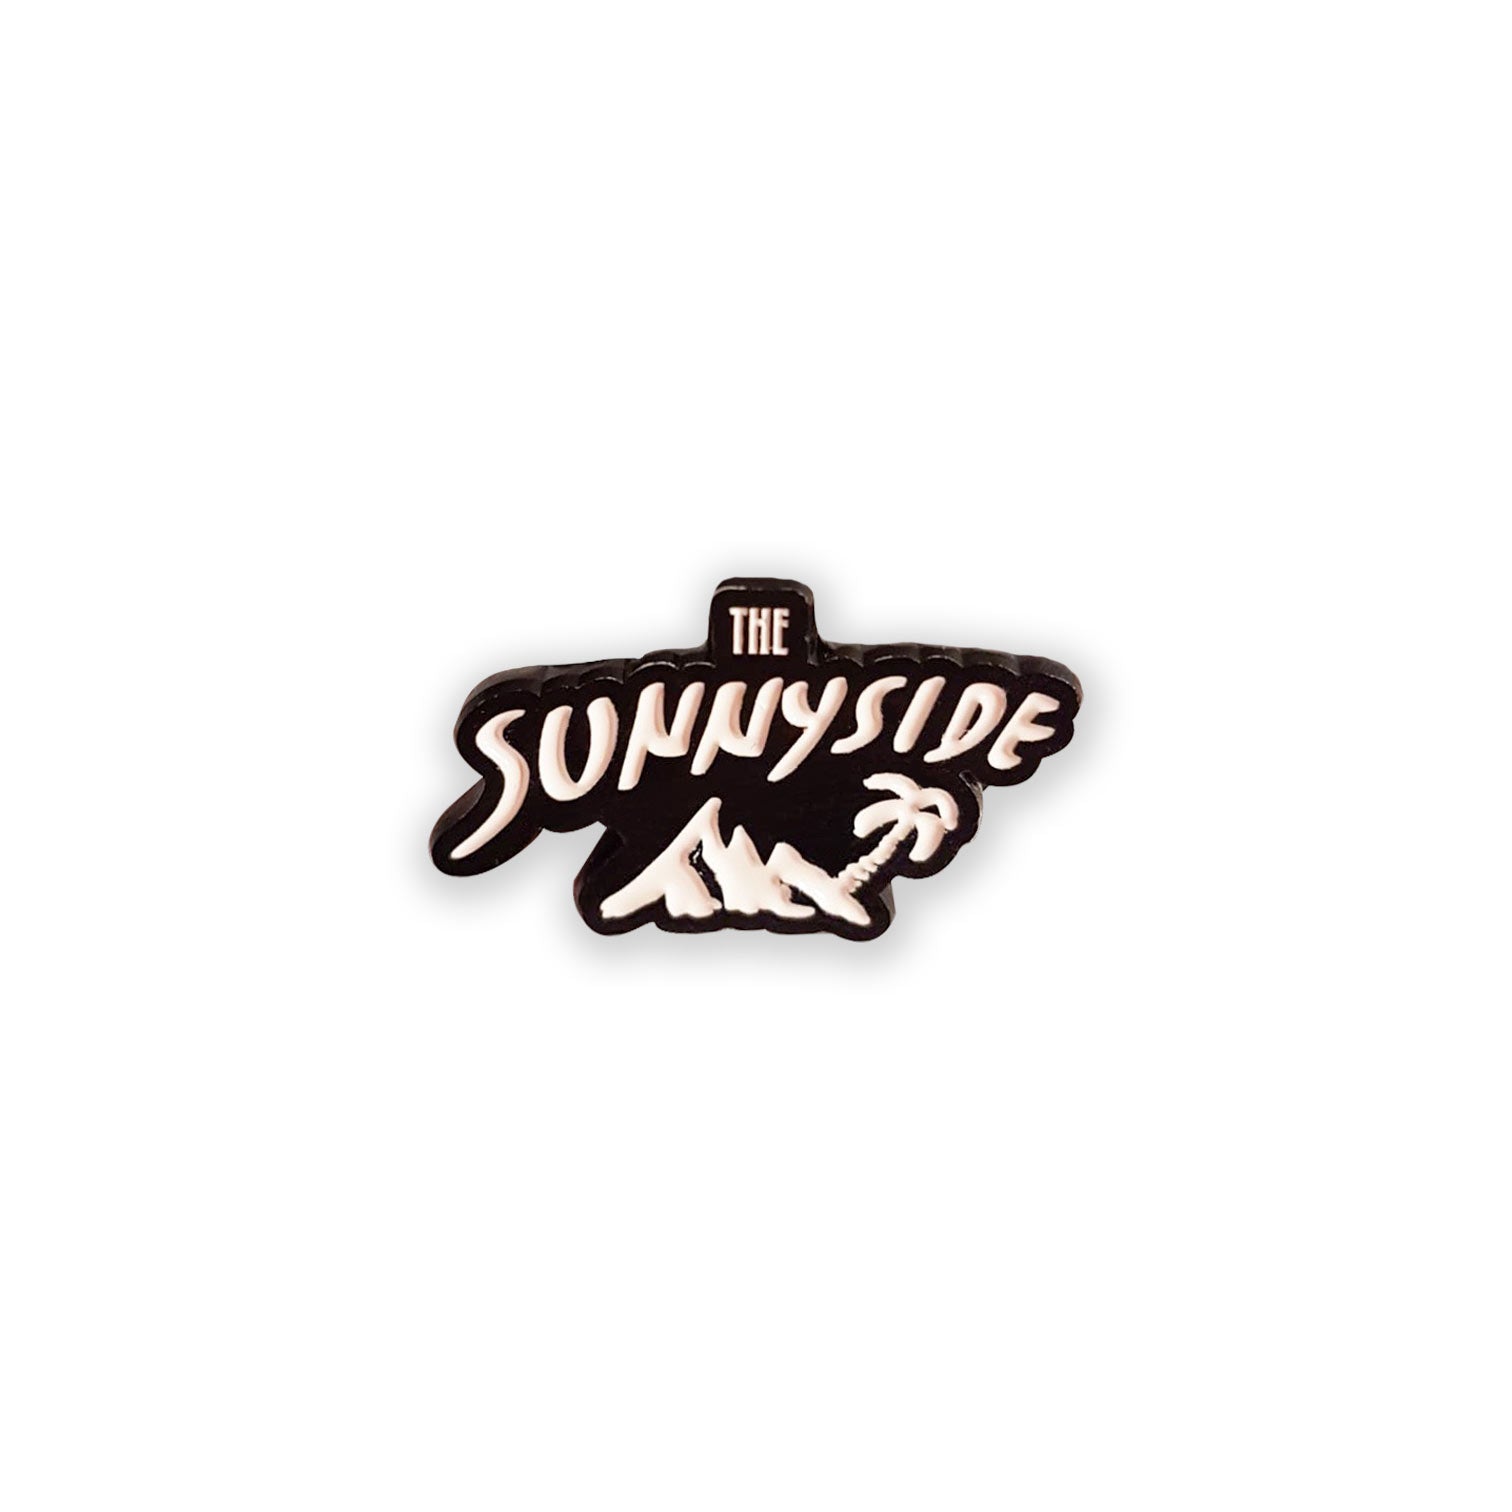 The Sunnyside Pin - THE SUNNYSIDE